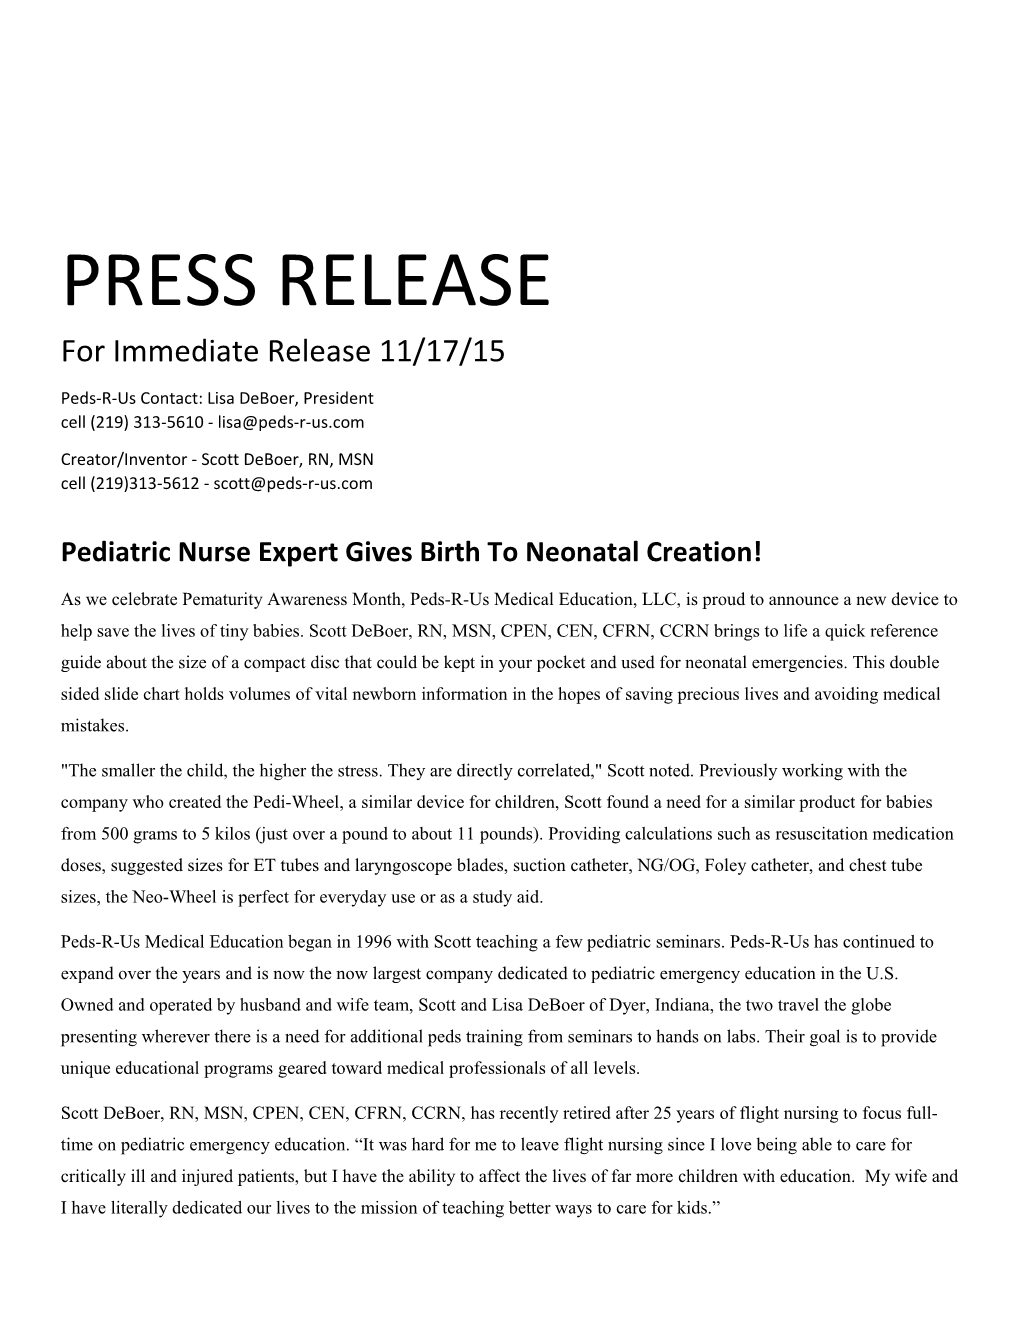 Pediatric Nurse Expert Gives Birth to Neonatal Creation!